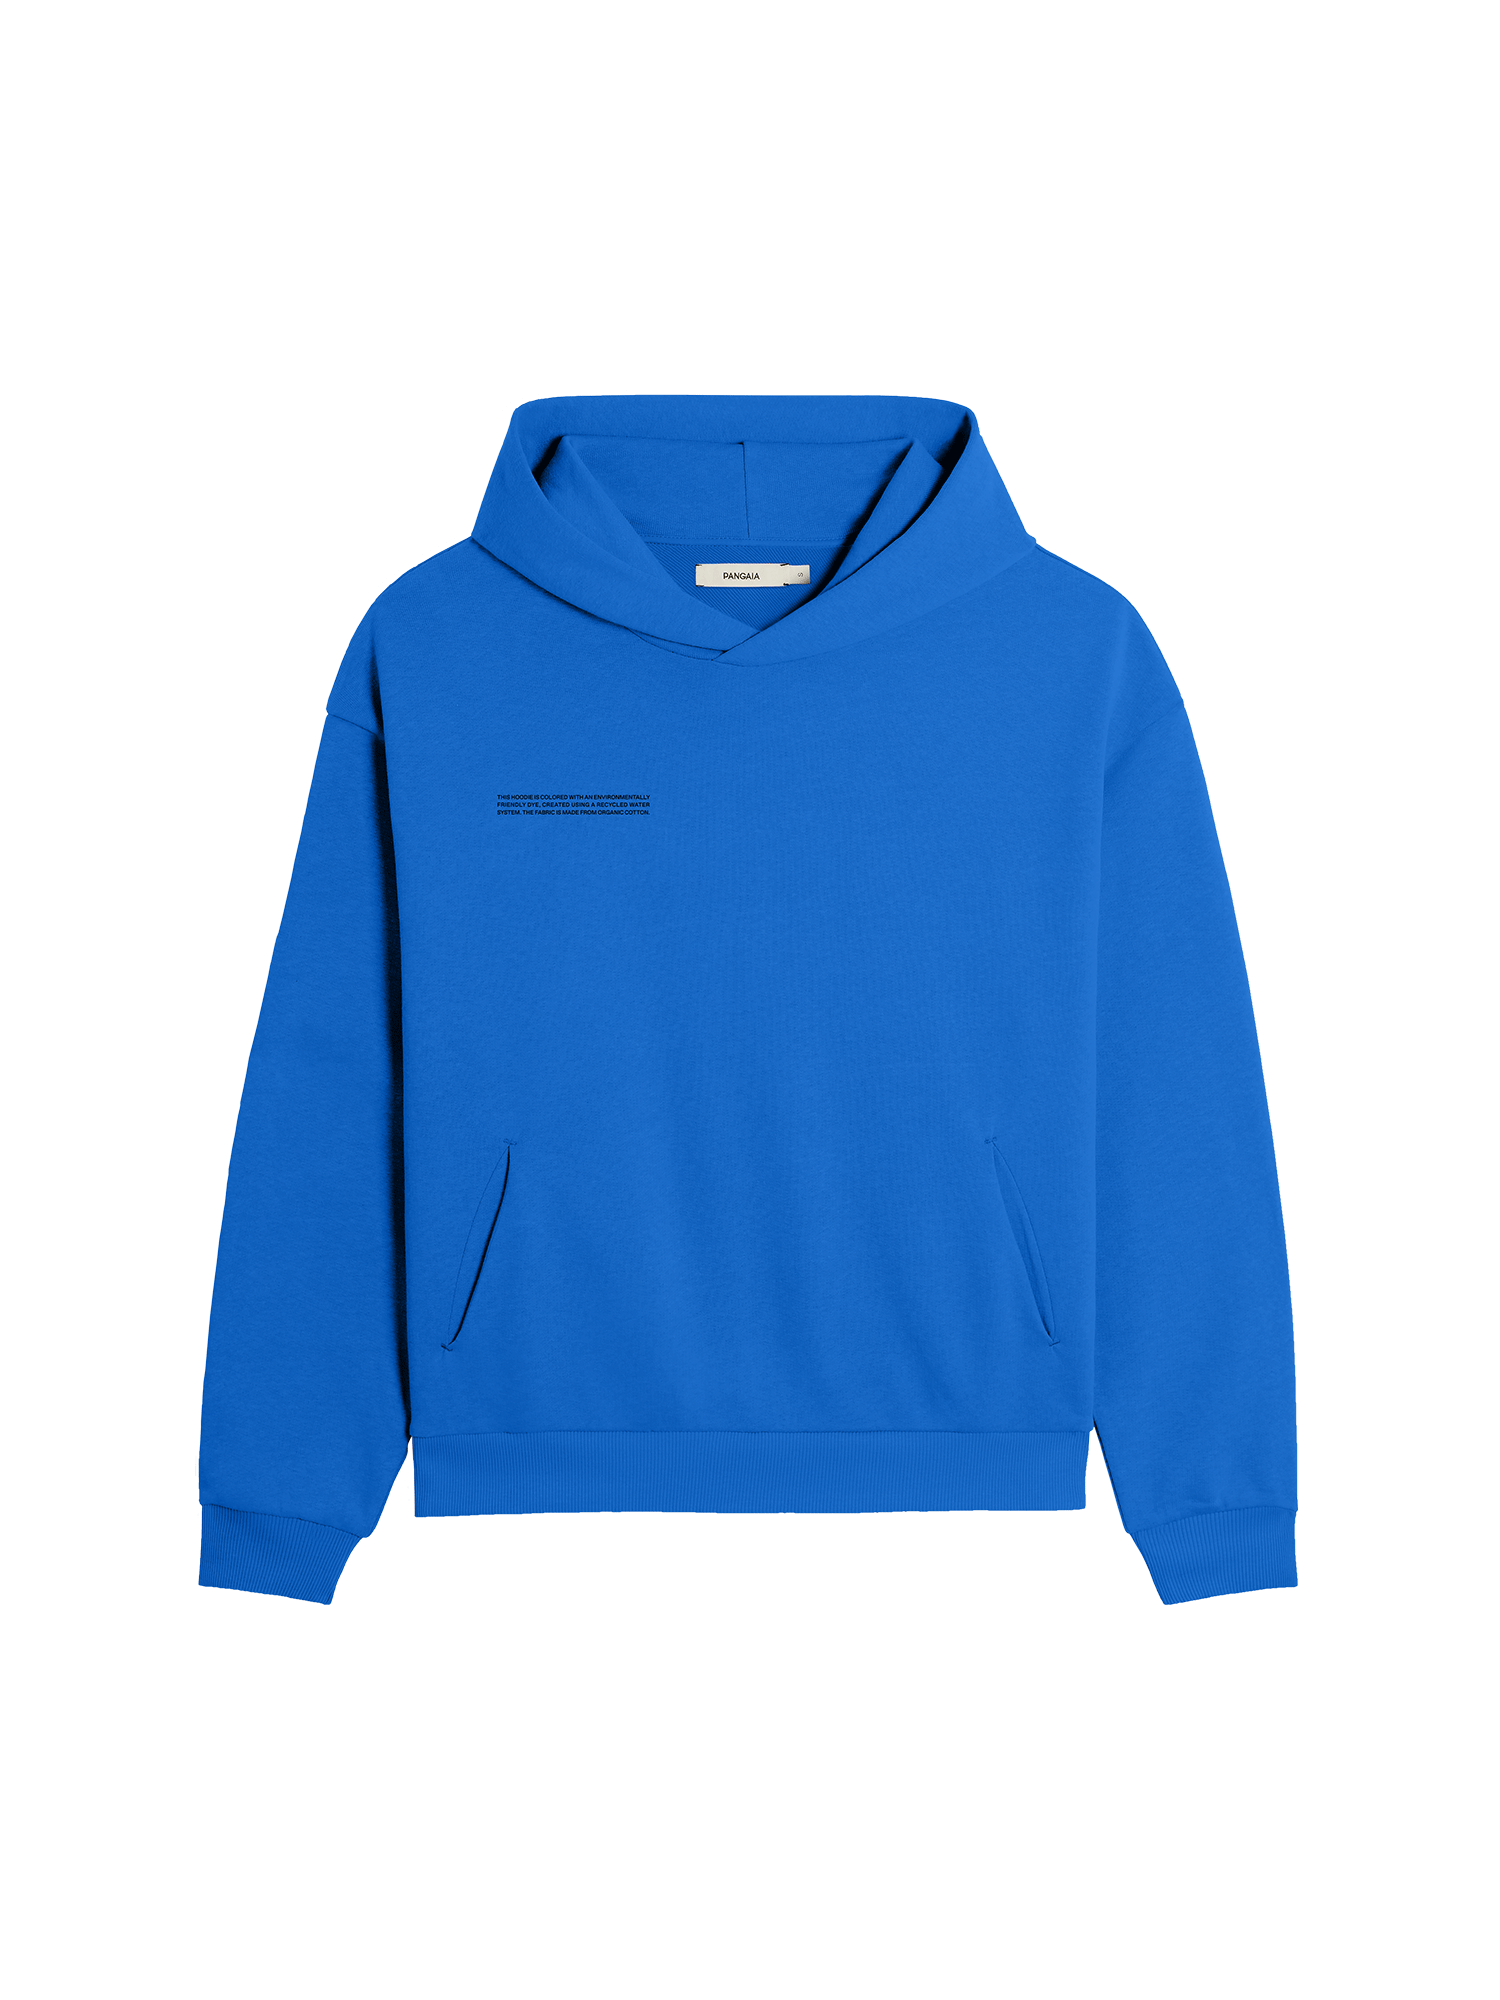 365 Midweight Sweatshirt - Cobalt Blue - Pangaia